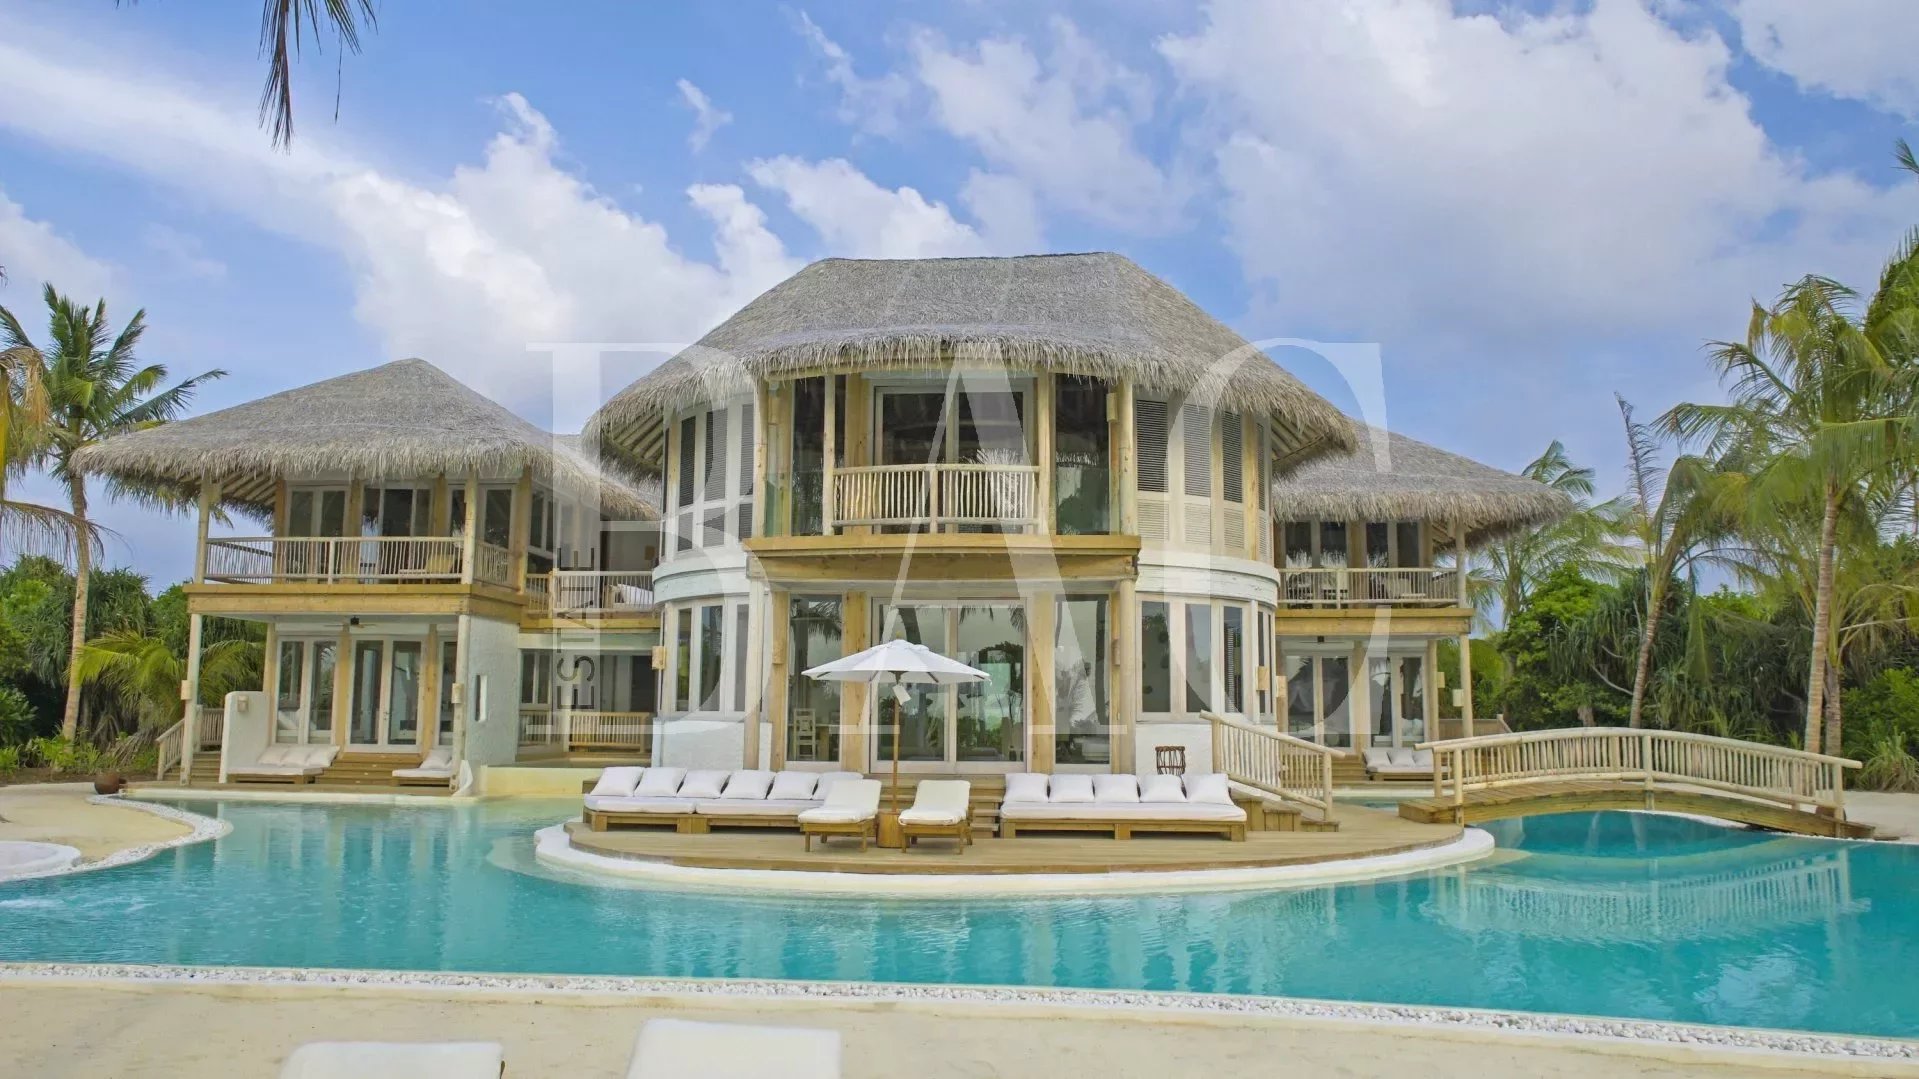 Villa on an island in the Maldives